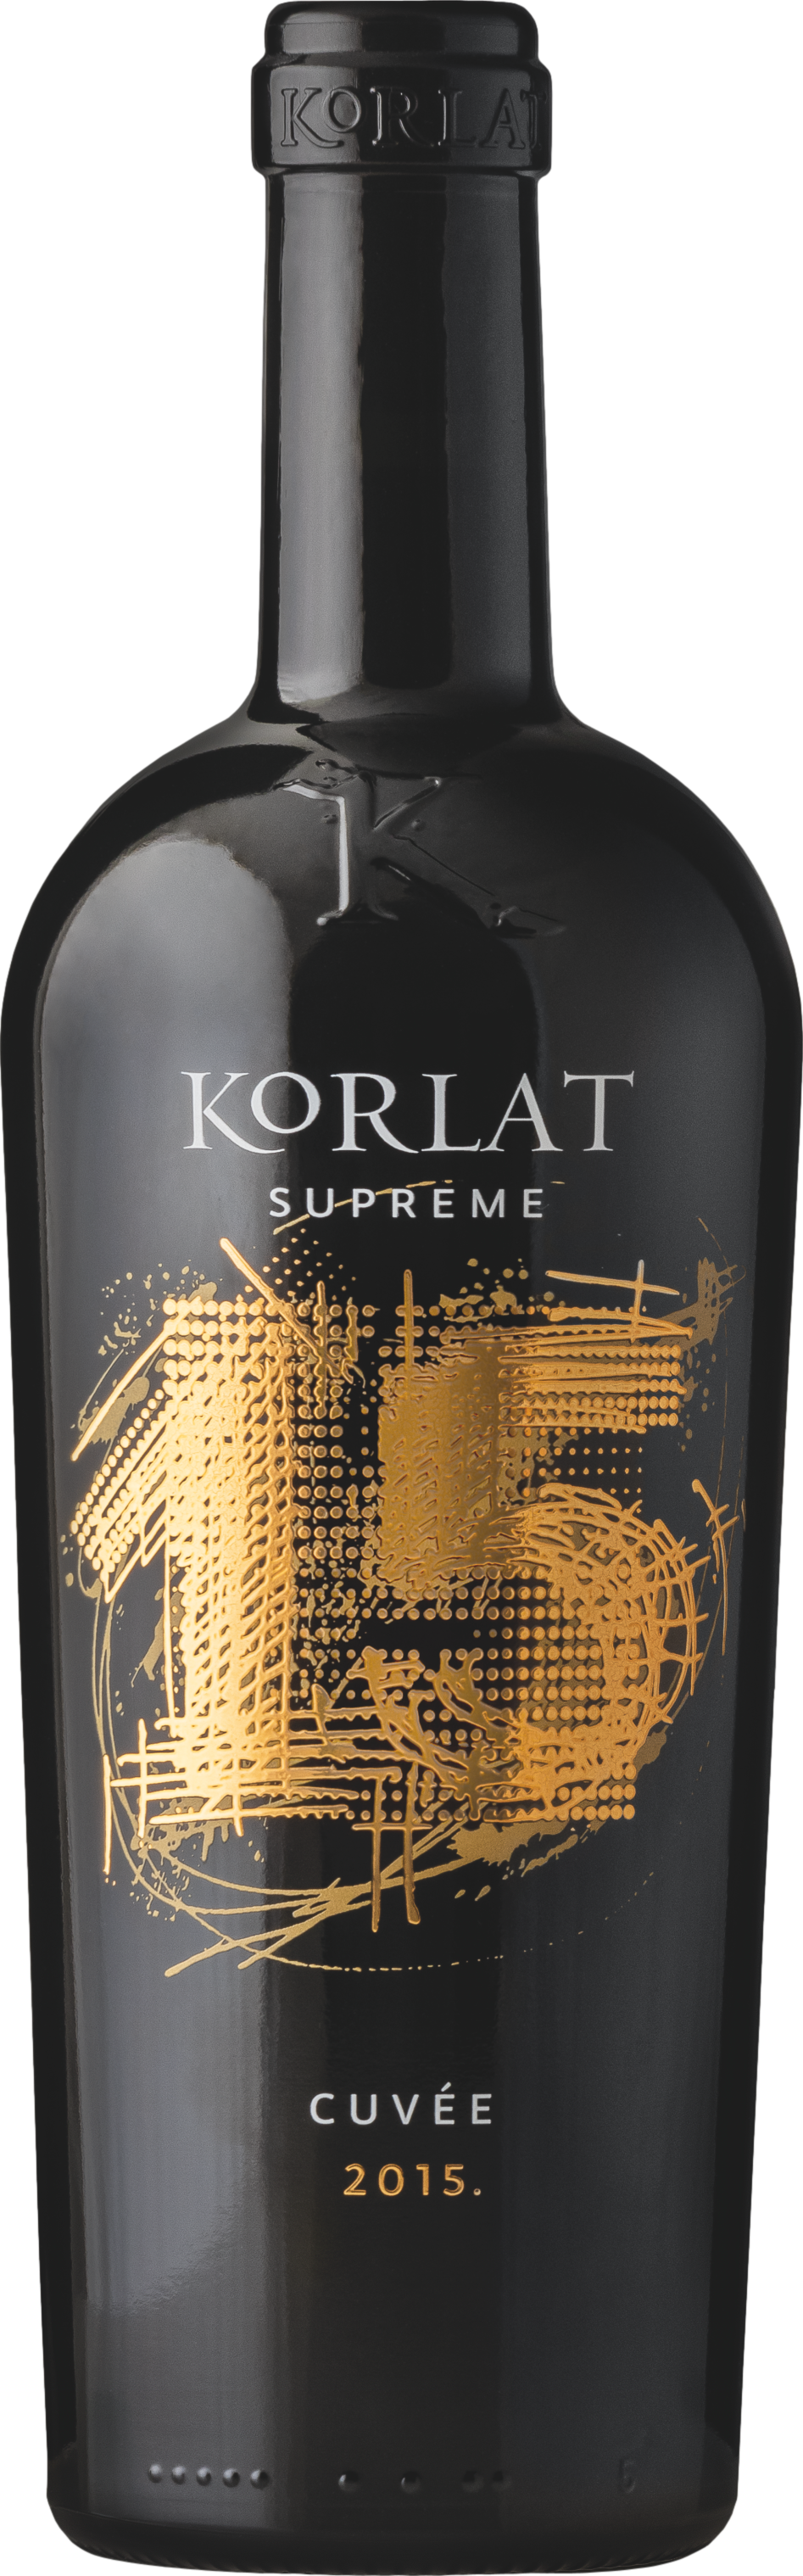 Korlat Supreme Cuvee 2015